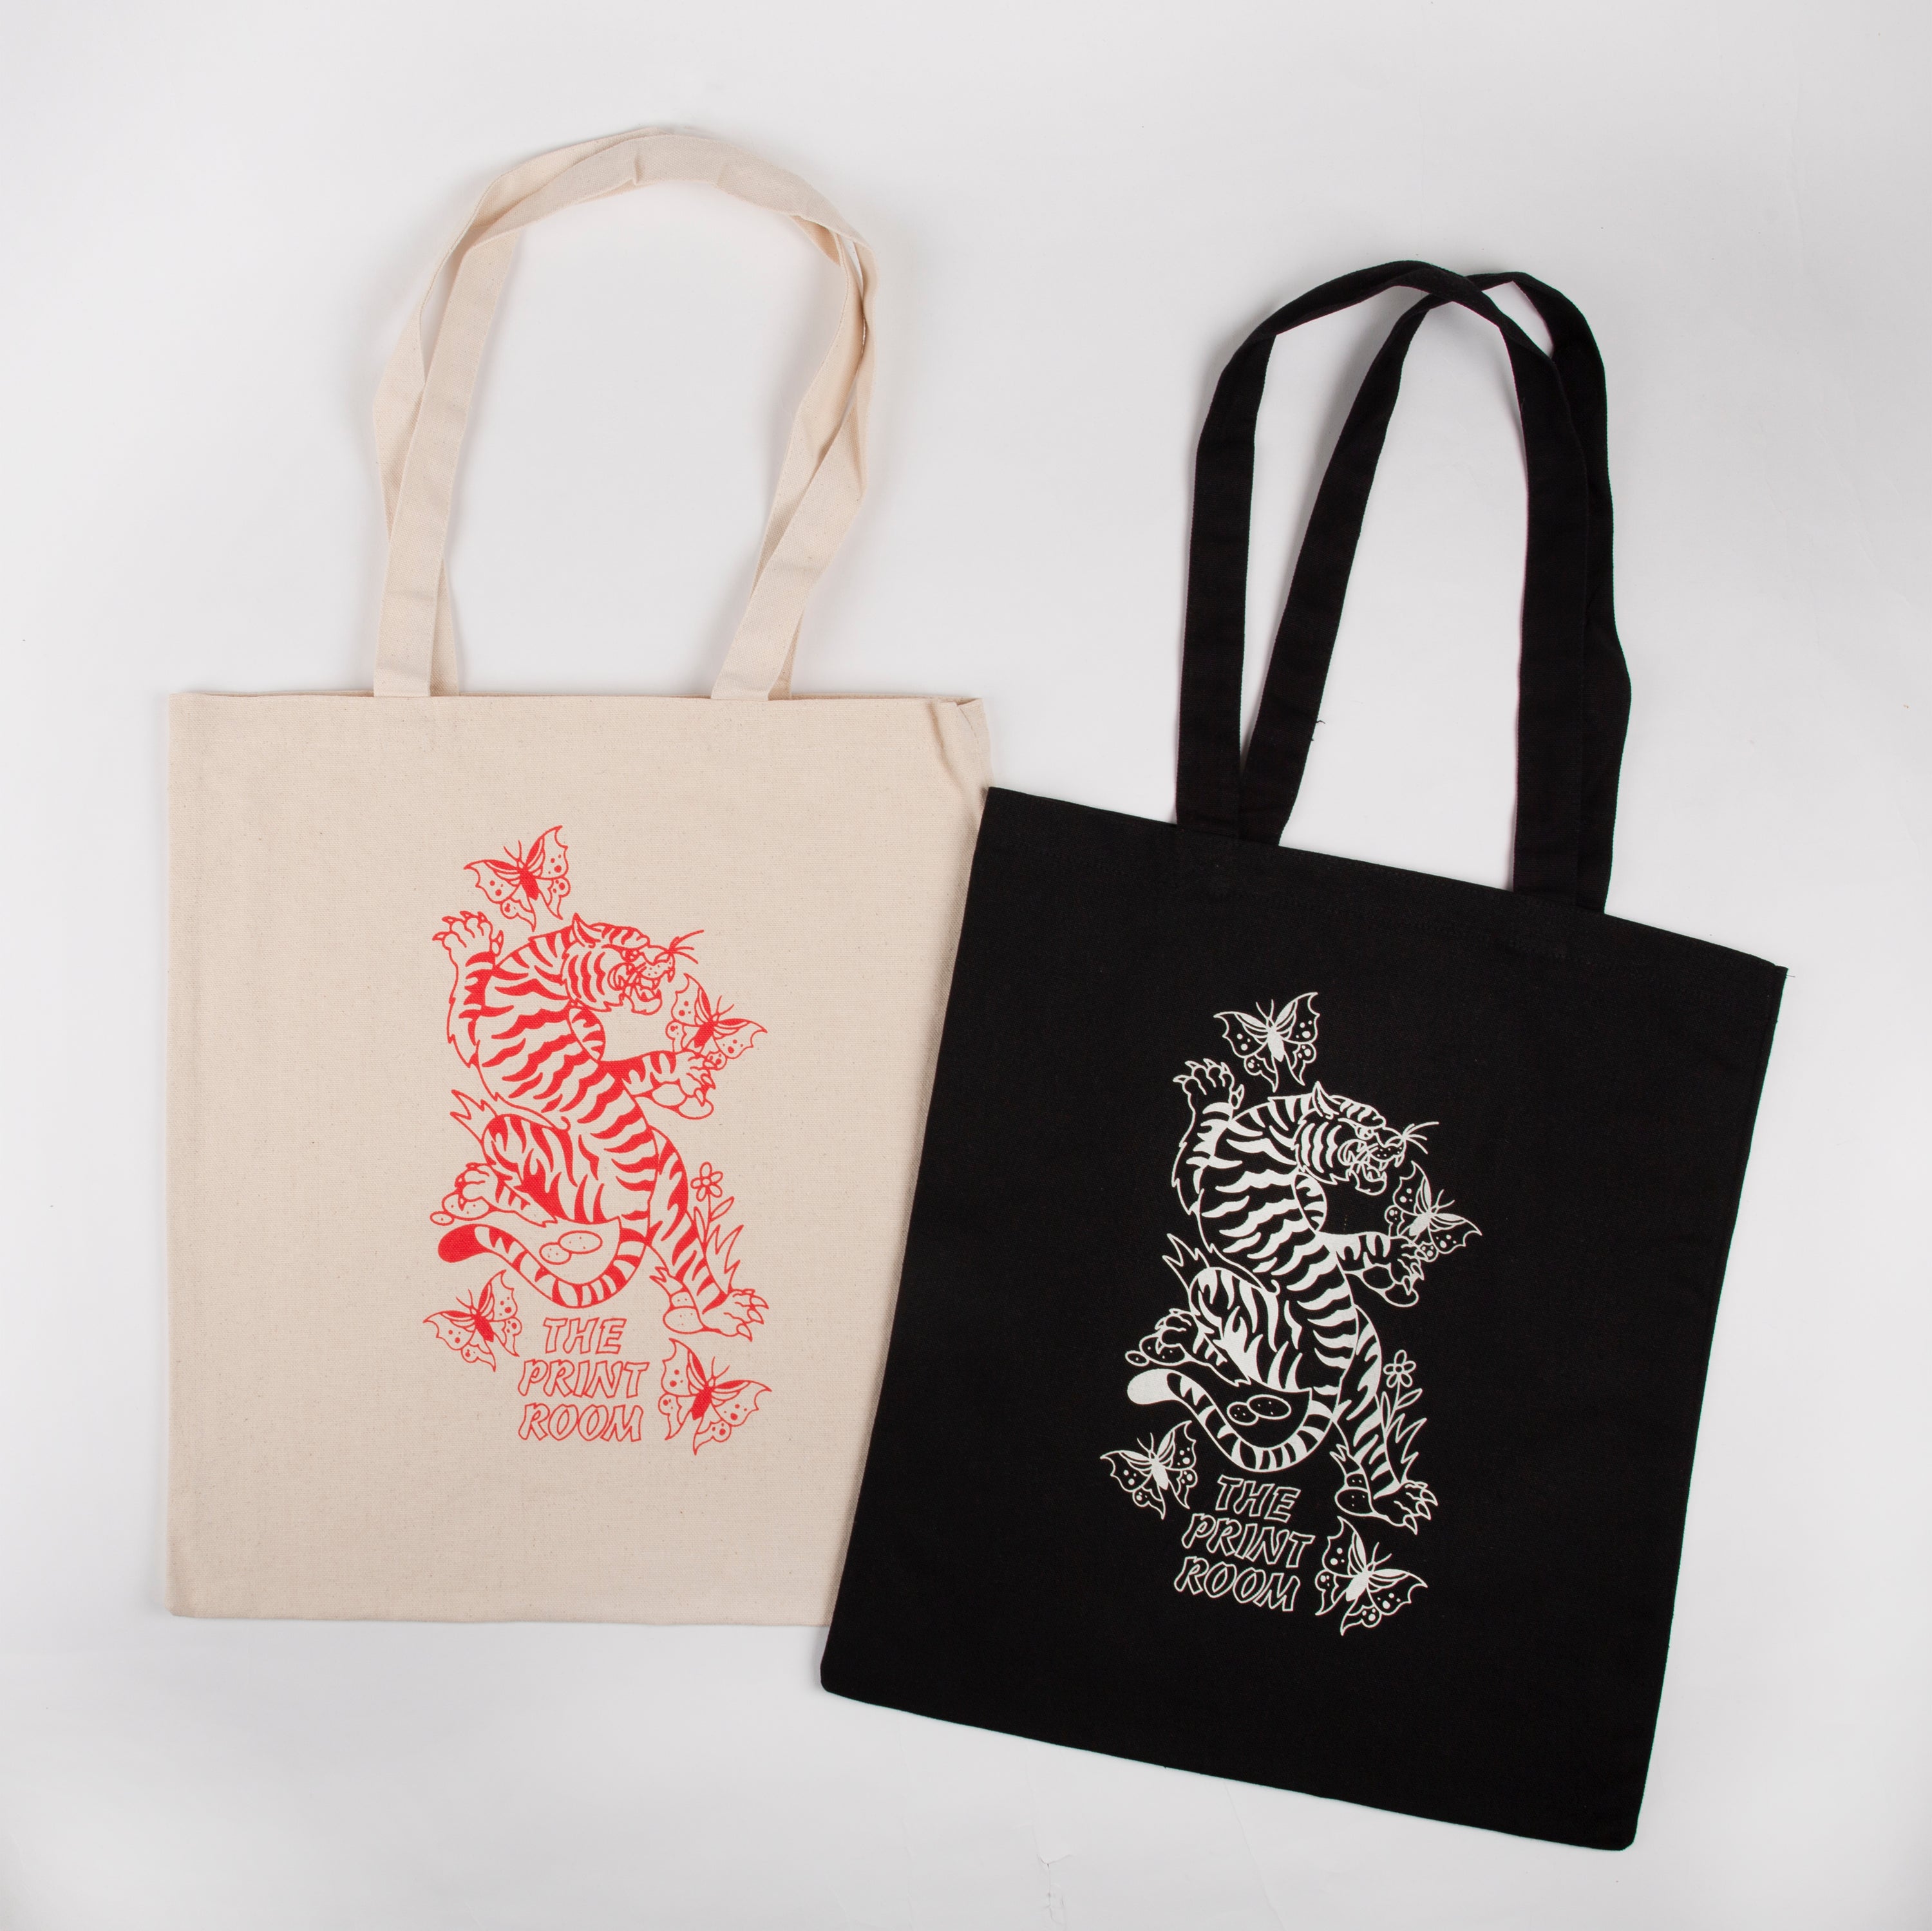 Custom printing tote bags | The Print Room